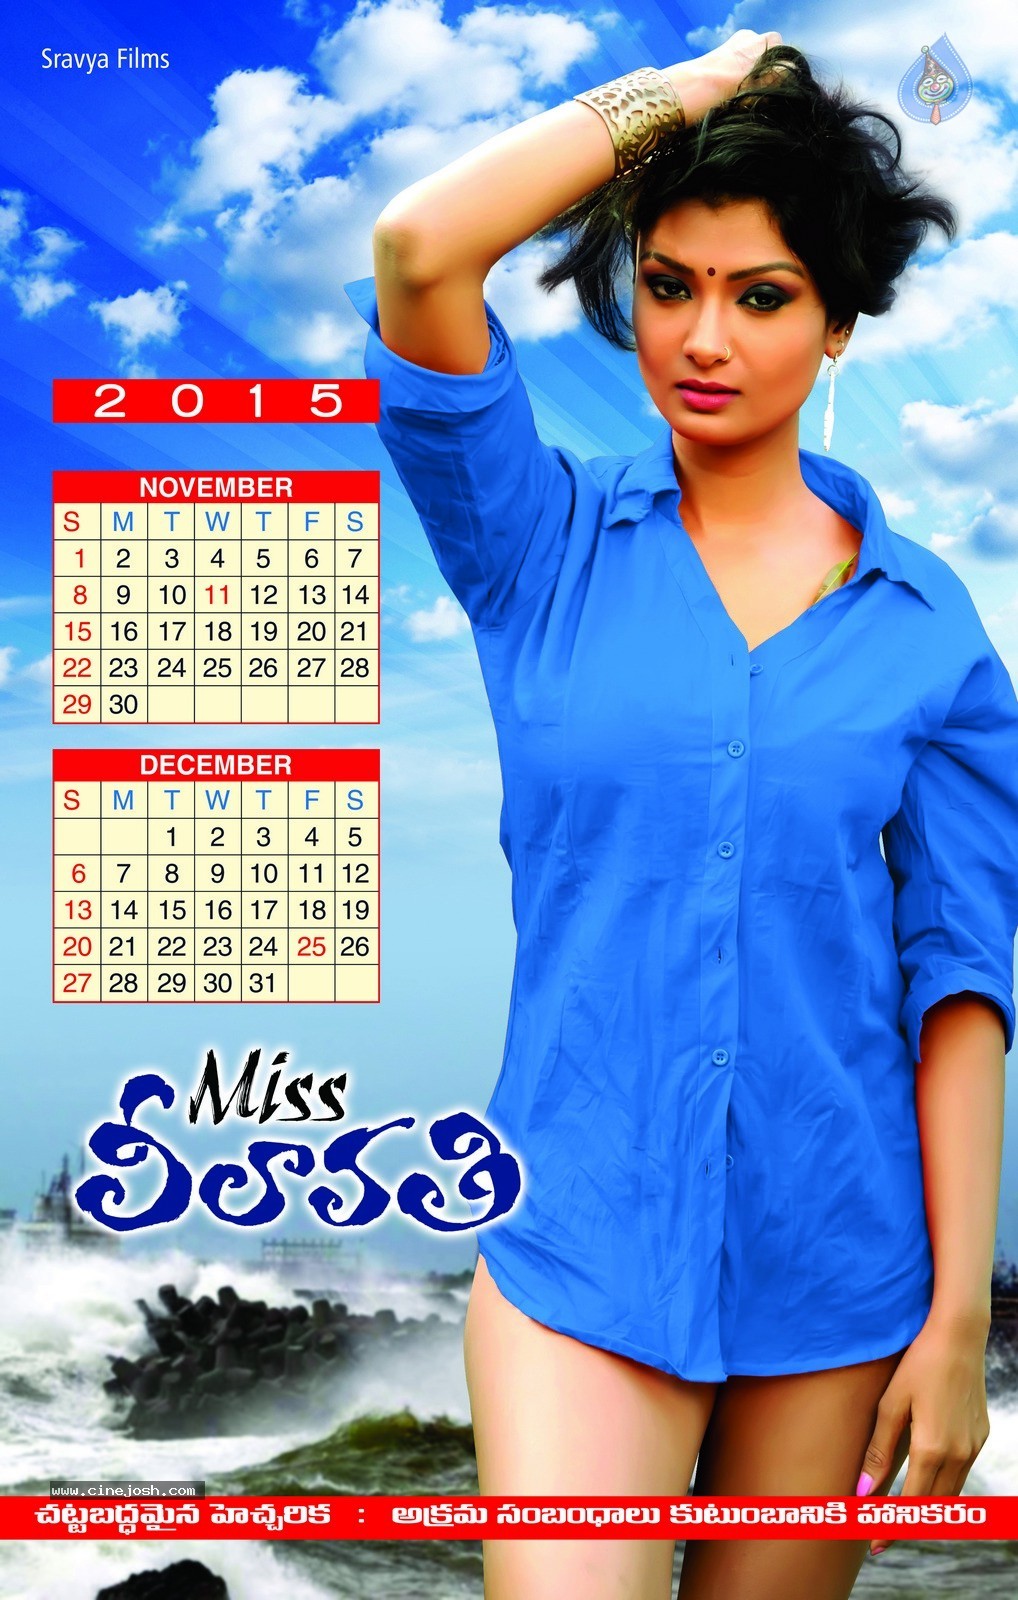 Miss Leelavathi Hot Calendar Photos - 4 / 7 photos